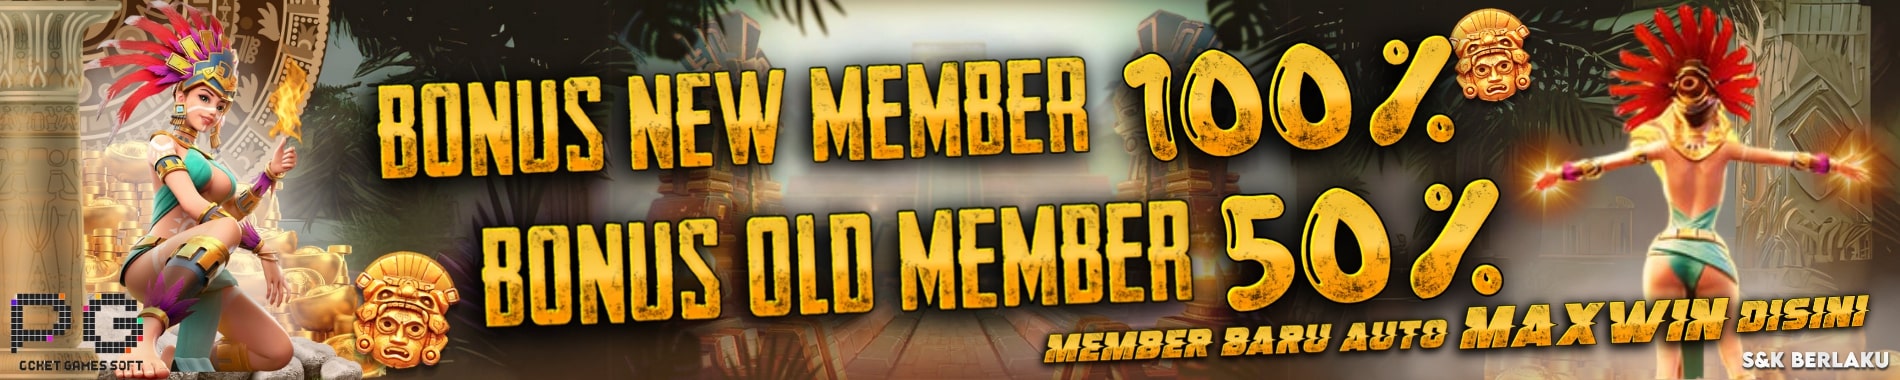 100% New Member